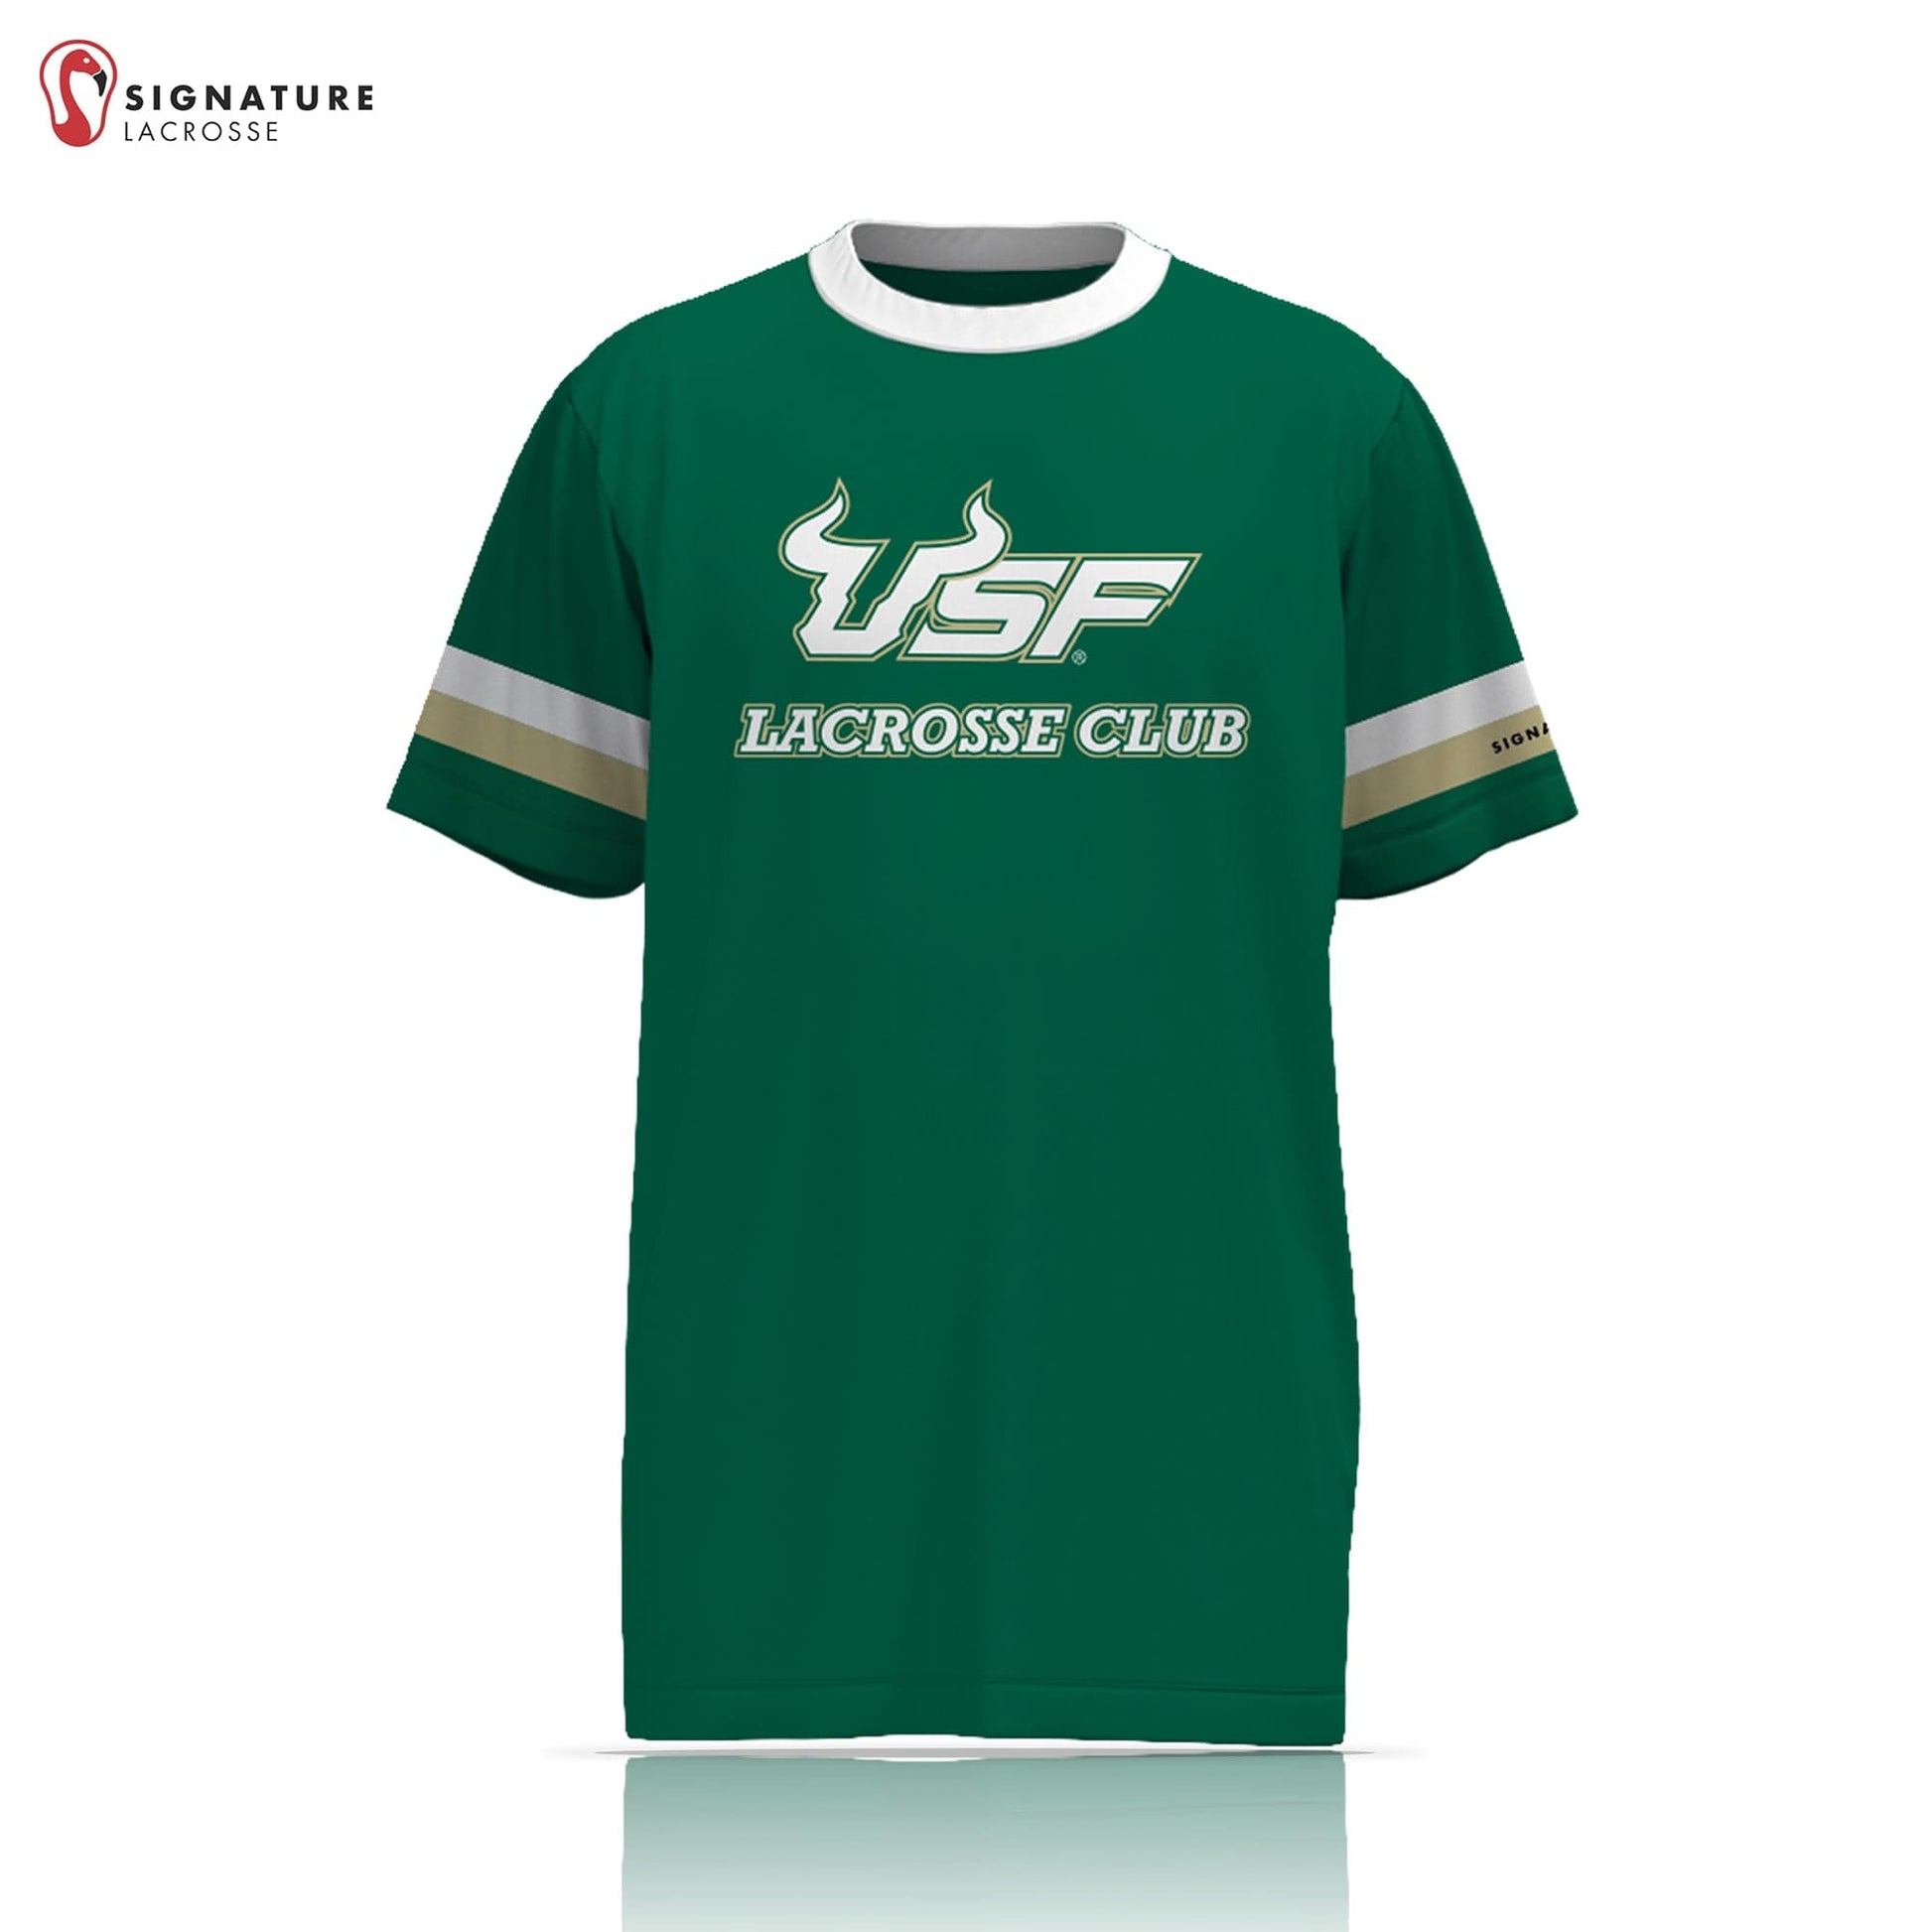 USF Lacrosse Men's Green Short Sleeve Shooting Shirt Signature Lacrosse